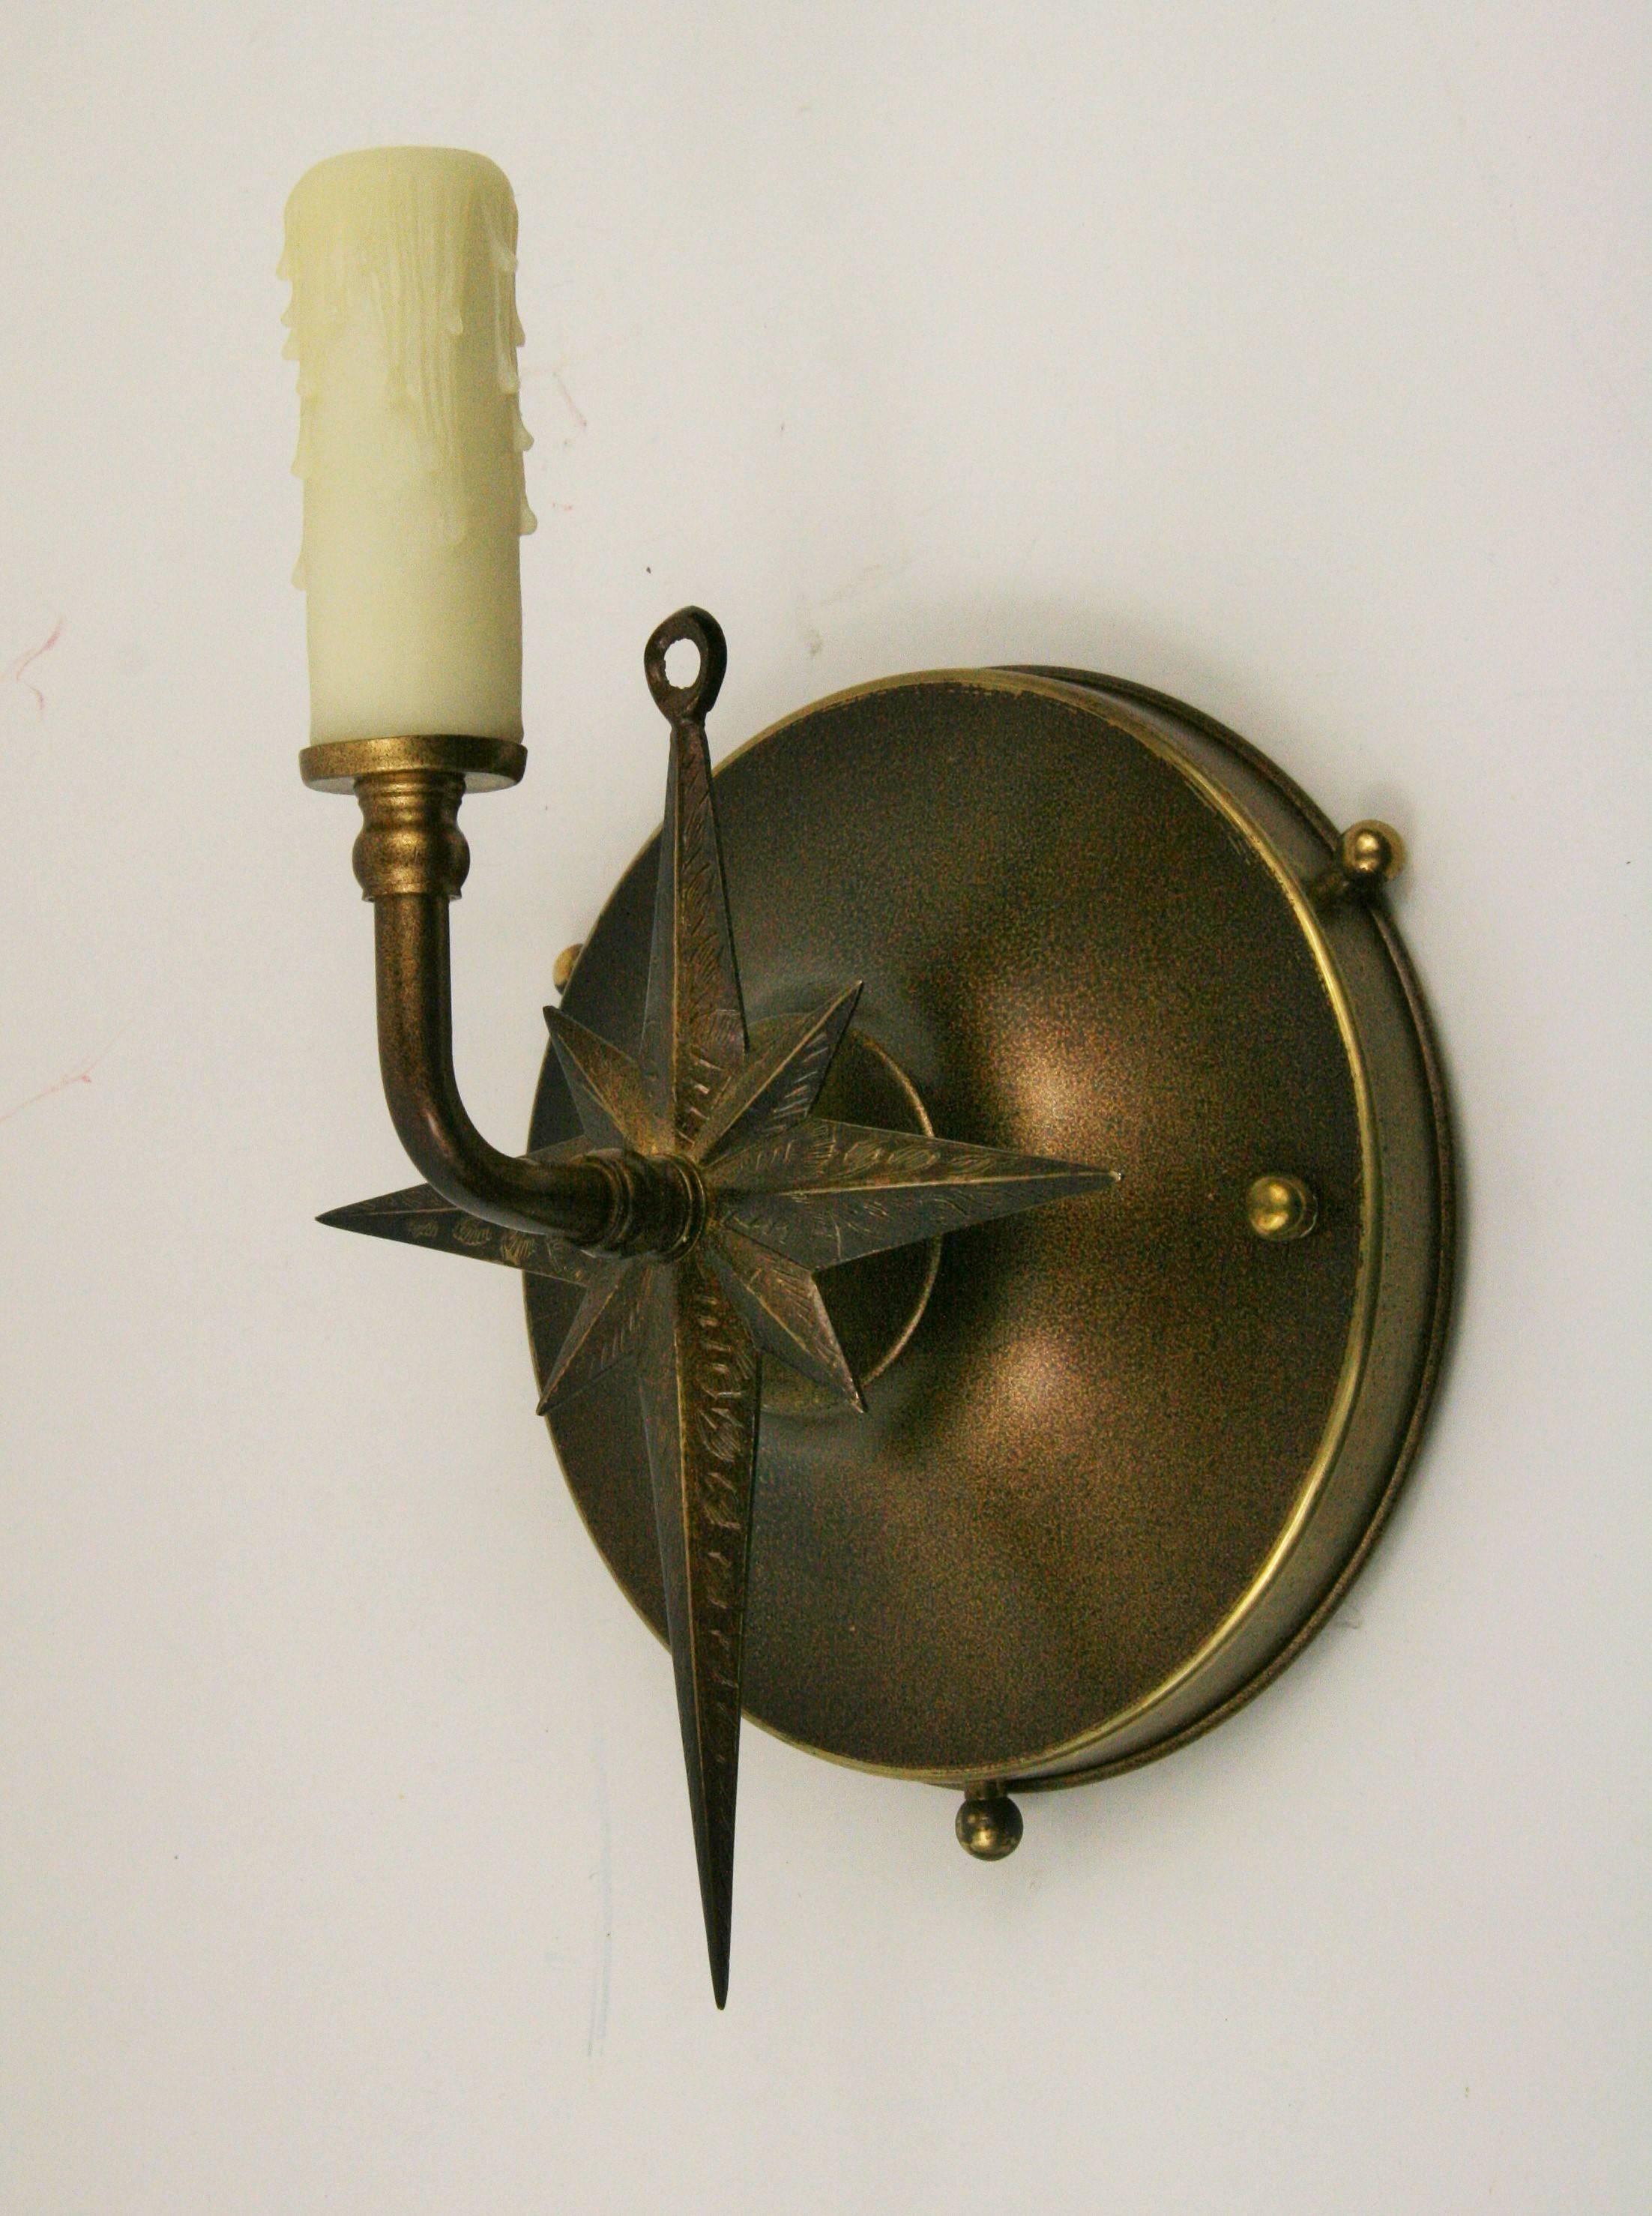 1-4033 pair of nautical brass starburst sconces.
Take one 60 watt candelabra bulb.